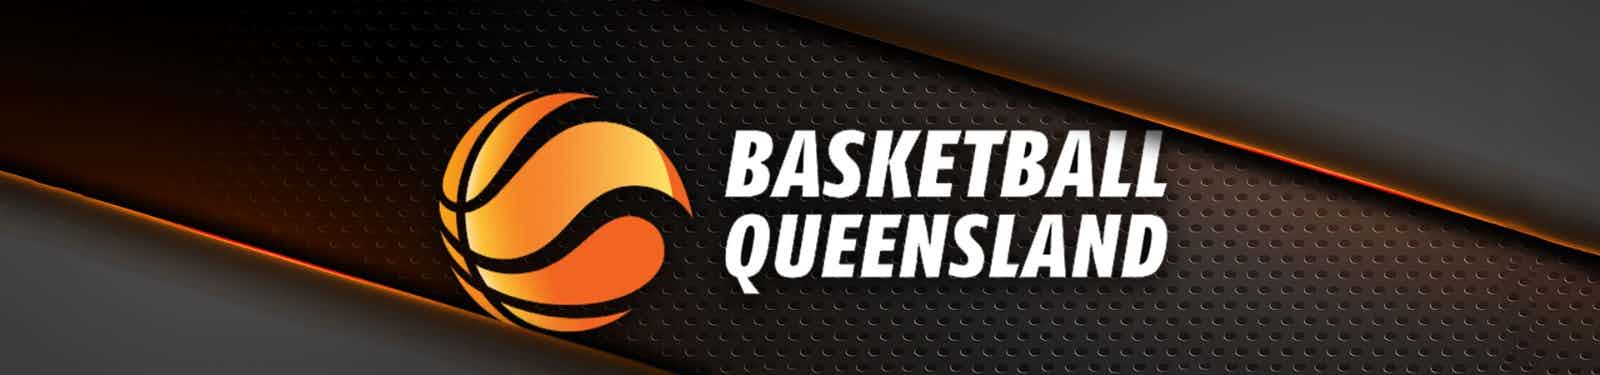 Basketball Queensland Channel Header Cover Image